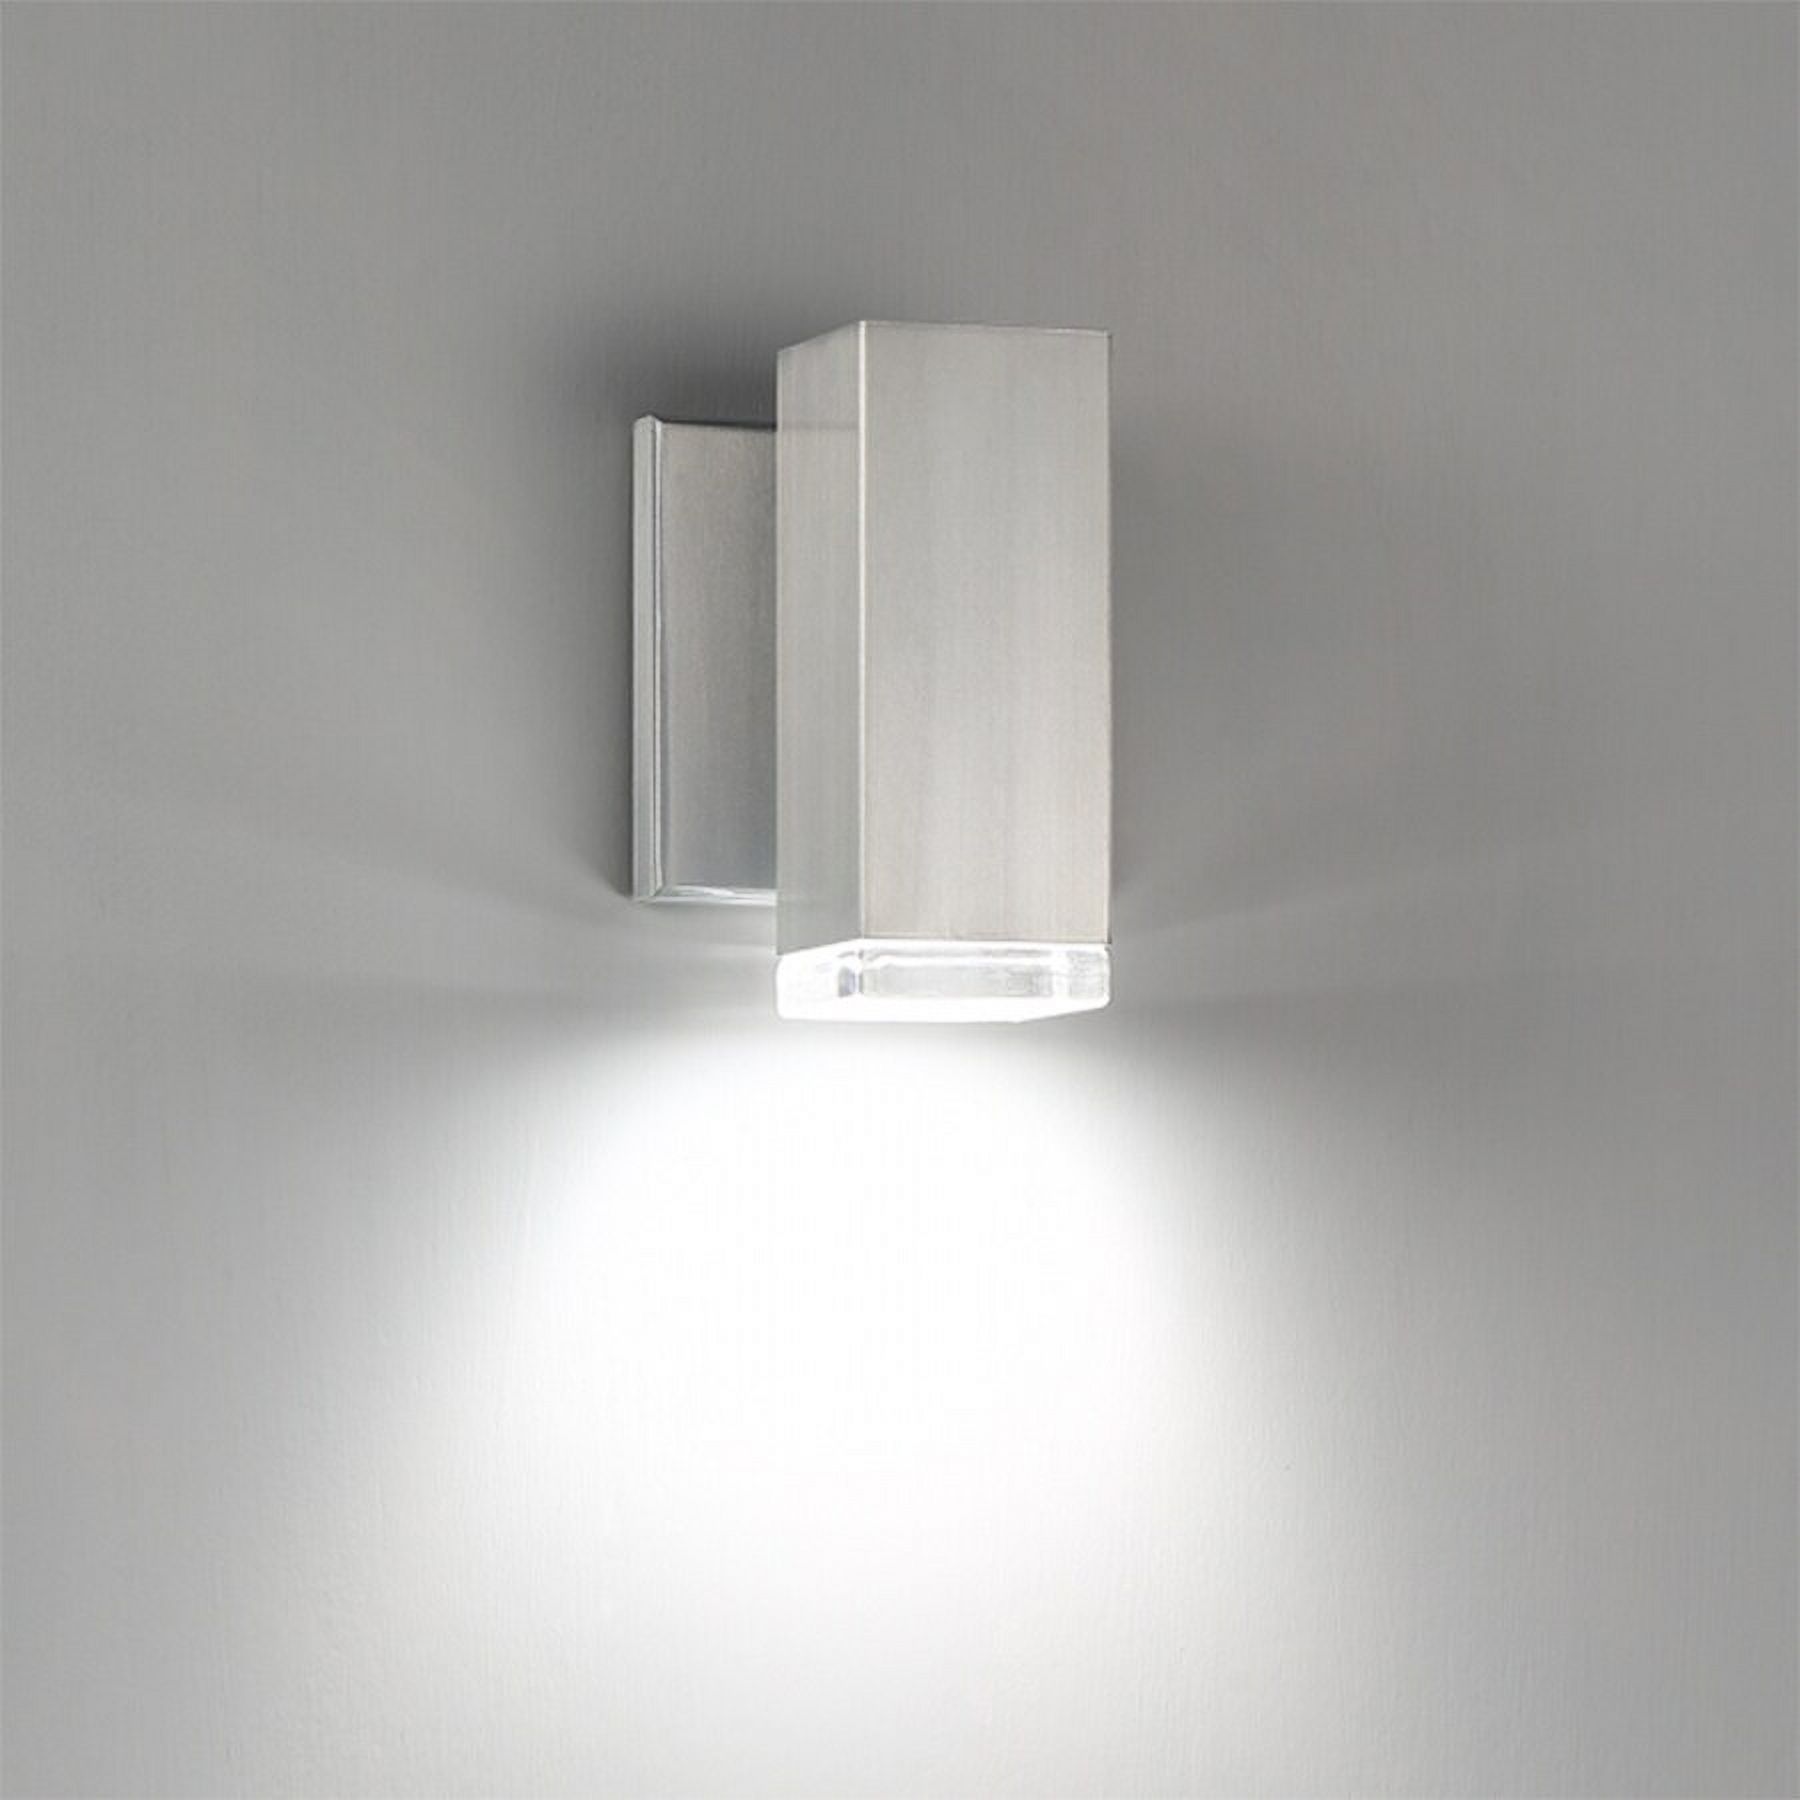 WAC Lighting Block 1-Light LED Aluminum Indoor & Outdoor Wall Light in Gray - image 2 of 5